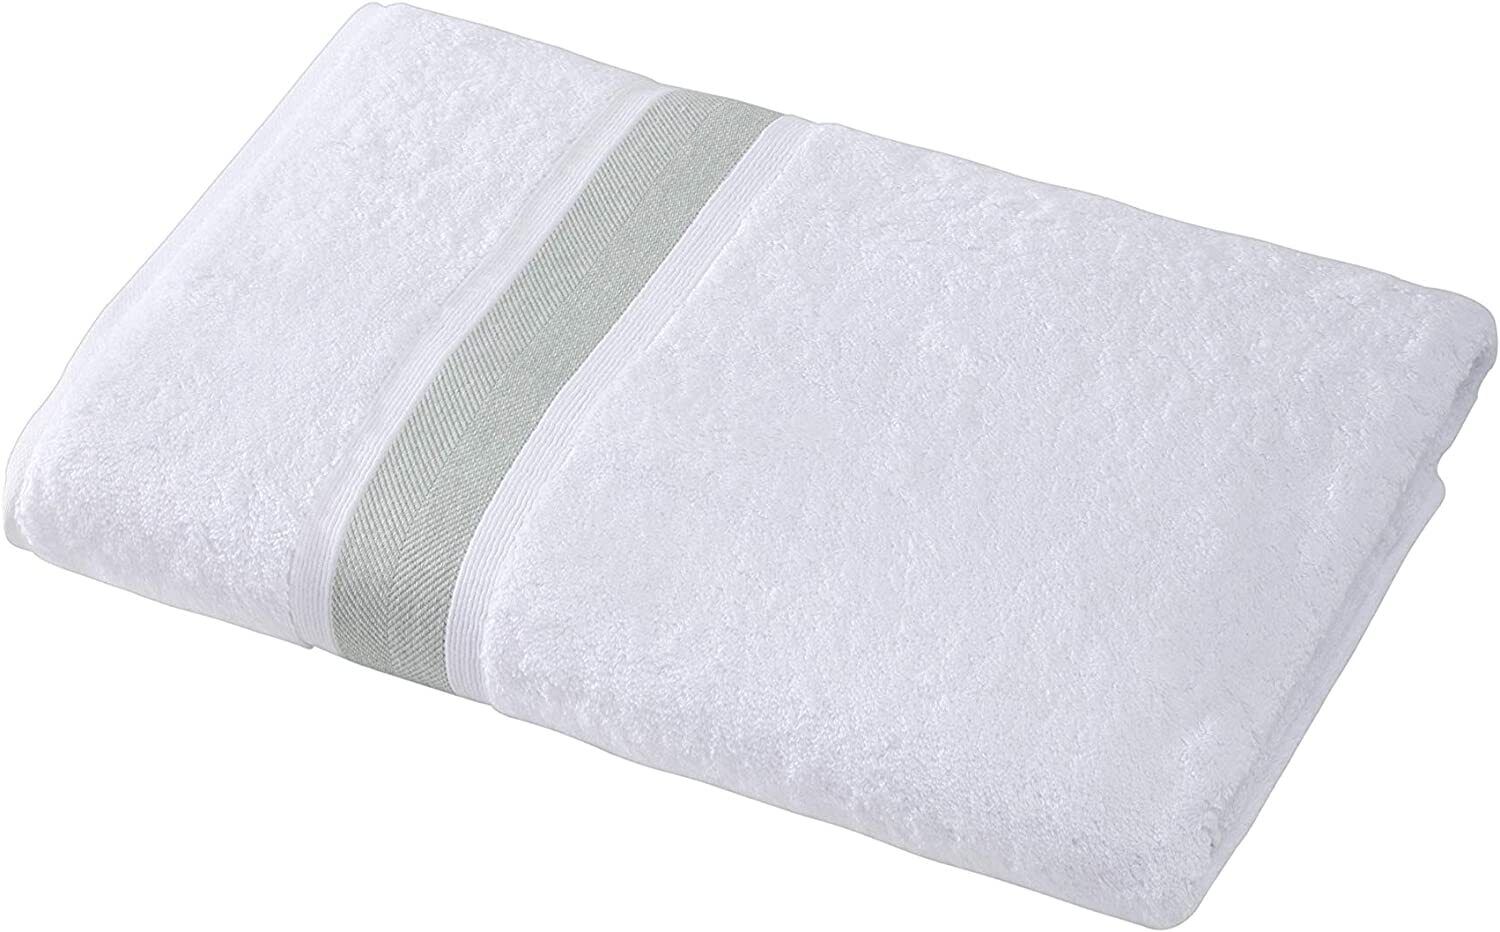 Large Bath Towels 100% Cotton Turkish Bath Towel 35x67 Green White